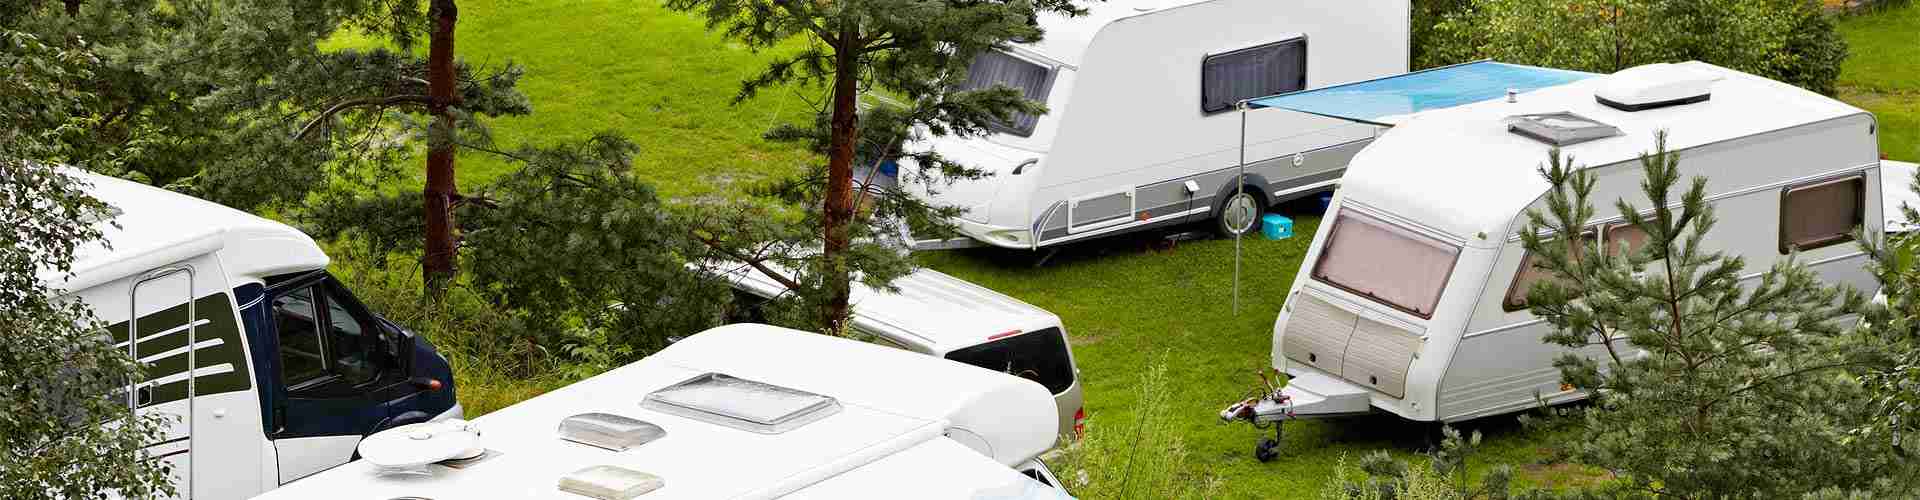 Campings y bungalows en Colindres
           
           


          
          
          


